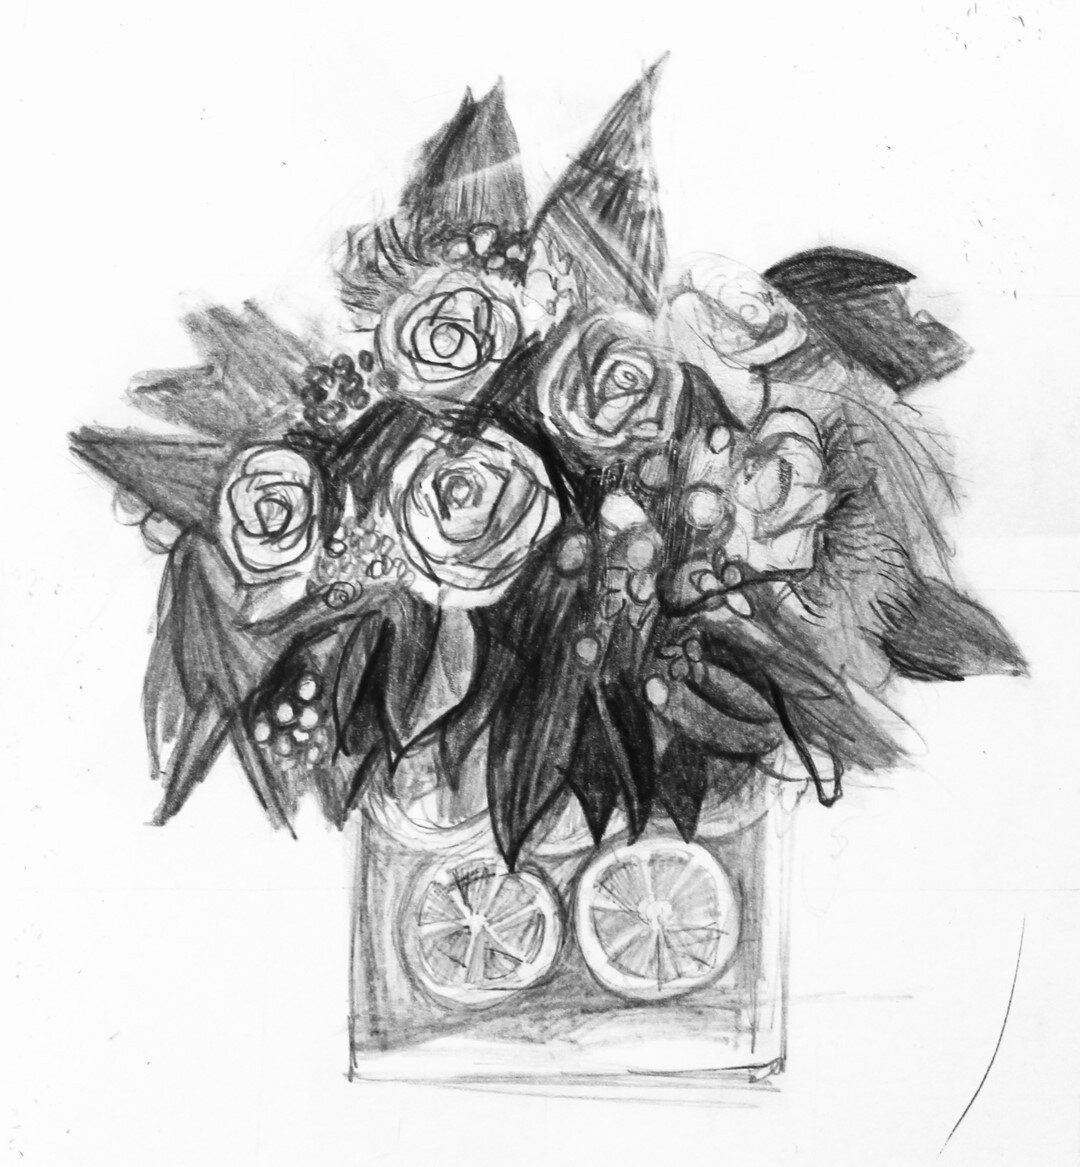 &quot;Orangie&quot; Pencil Drawing⠀⠀⠀⠀⠀⠀⠀⠀⠀
Artist: Bea McConkie, age 8⠀⠀⠀⠀⠀⠀⠀⠀⠀
.⠀⠀⠀⠀⠀⠀⠀⠀⠀
.⠀⠀⠀⠀⠀⠀⠀⠀⠀
.⠀⠀⠀⠀⠀⠀⠀⠀⠀
#flowers #floralarrangement #roses #flowerdrawing #flowerart #pencil #pencildrawing #drawing #graphite #graphitedrawing #instaart #art #